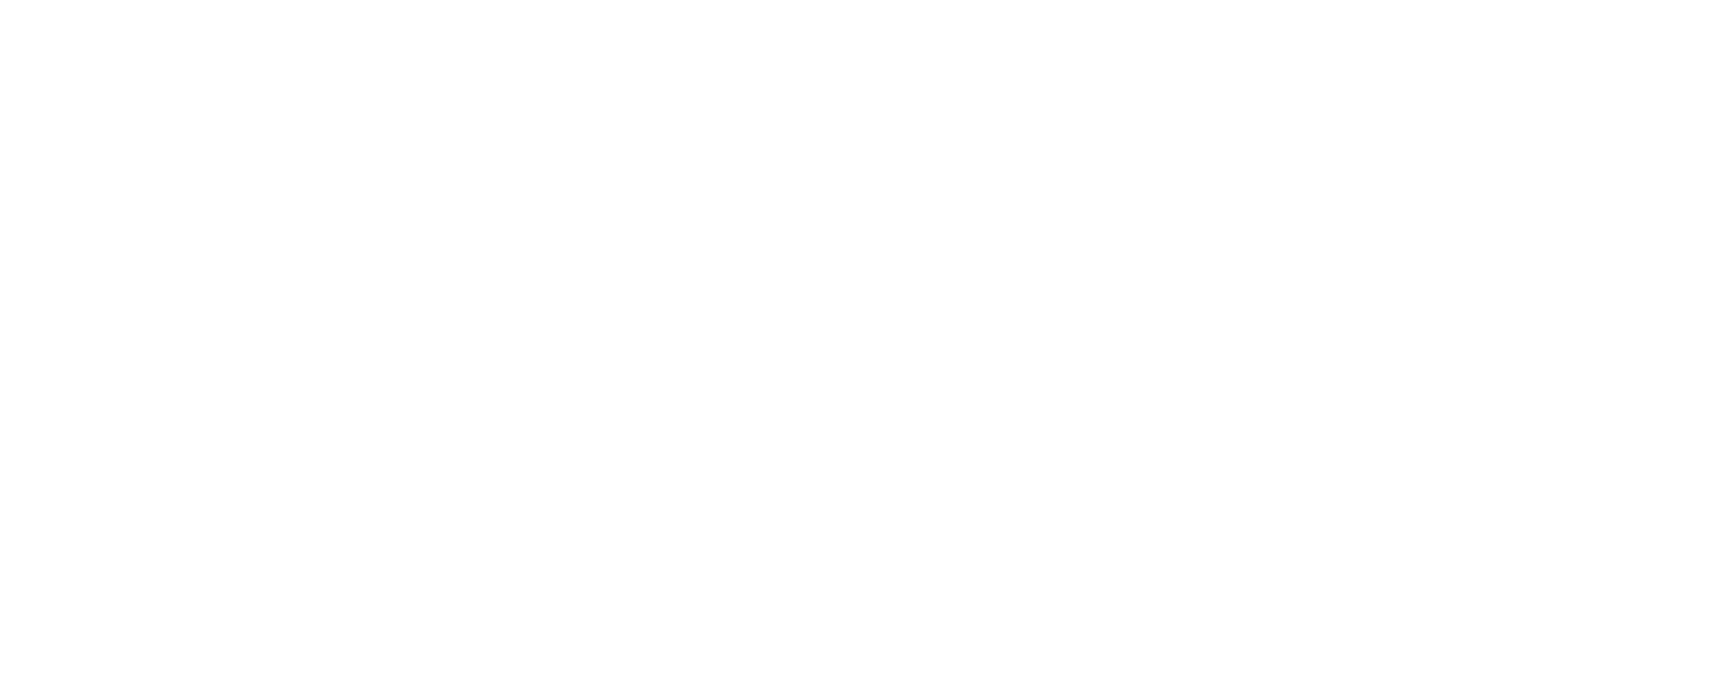 Exit Realty Logo